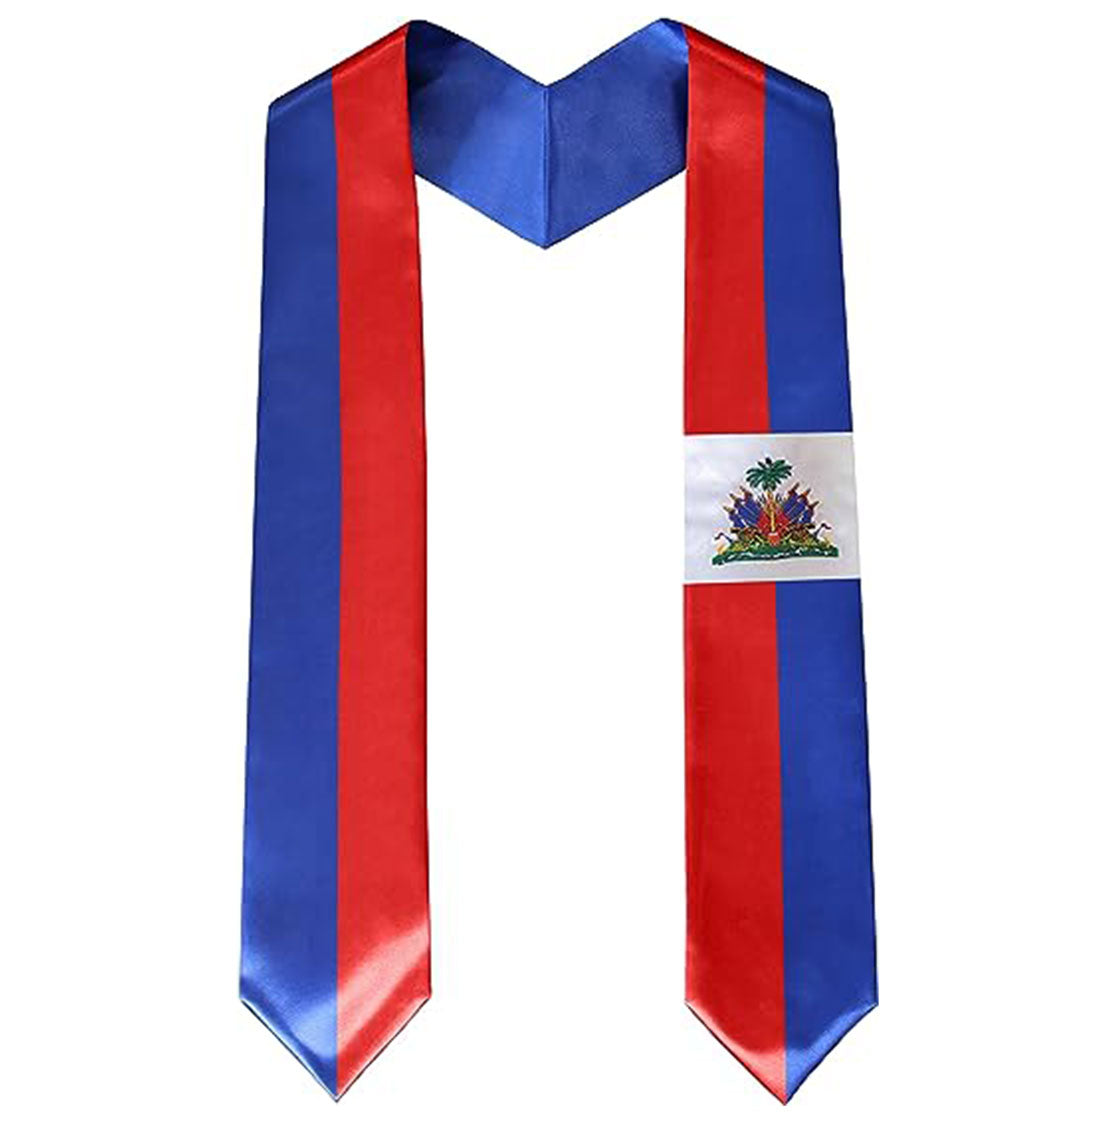 Haiti Flag Graduation Stole - Flag Sashes for Graduates